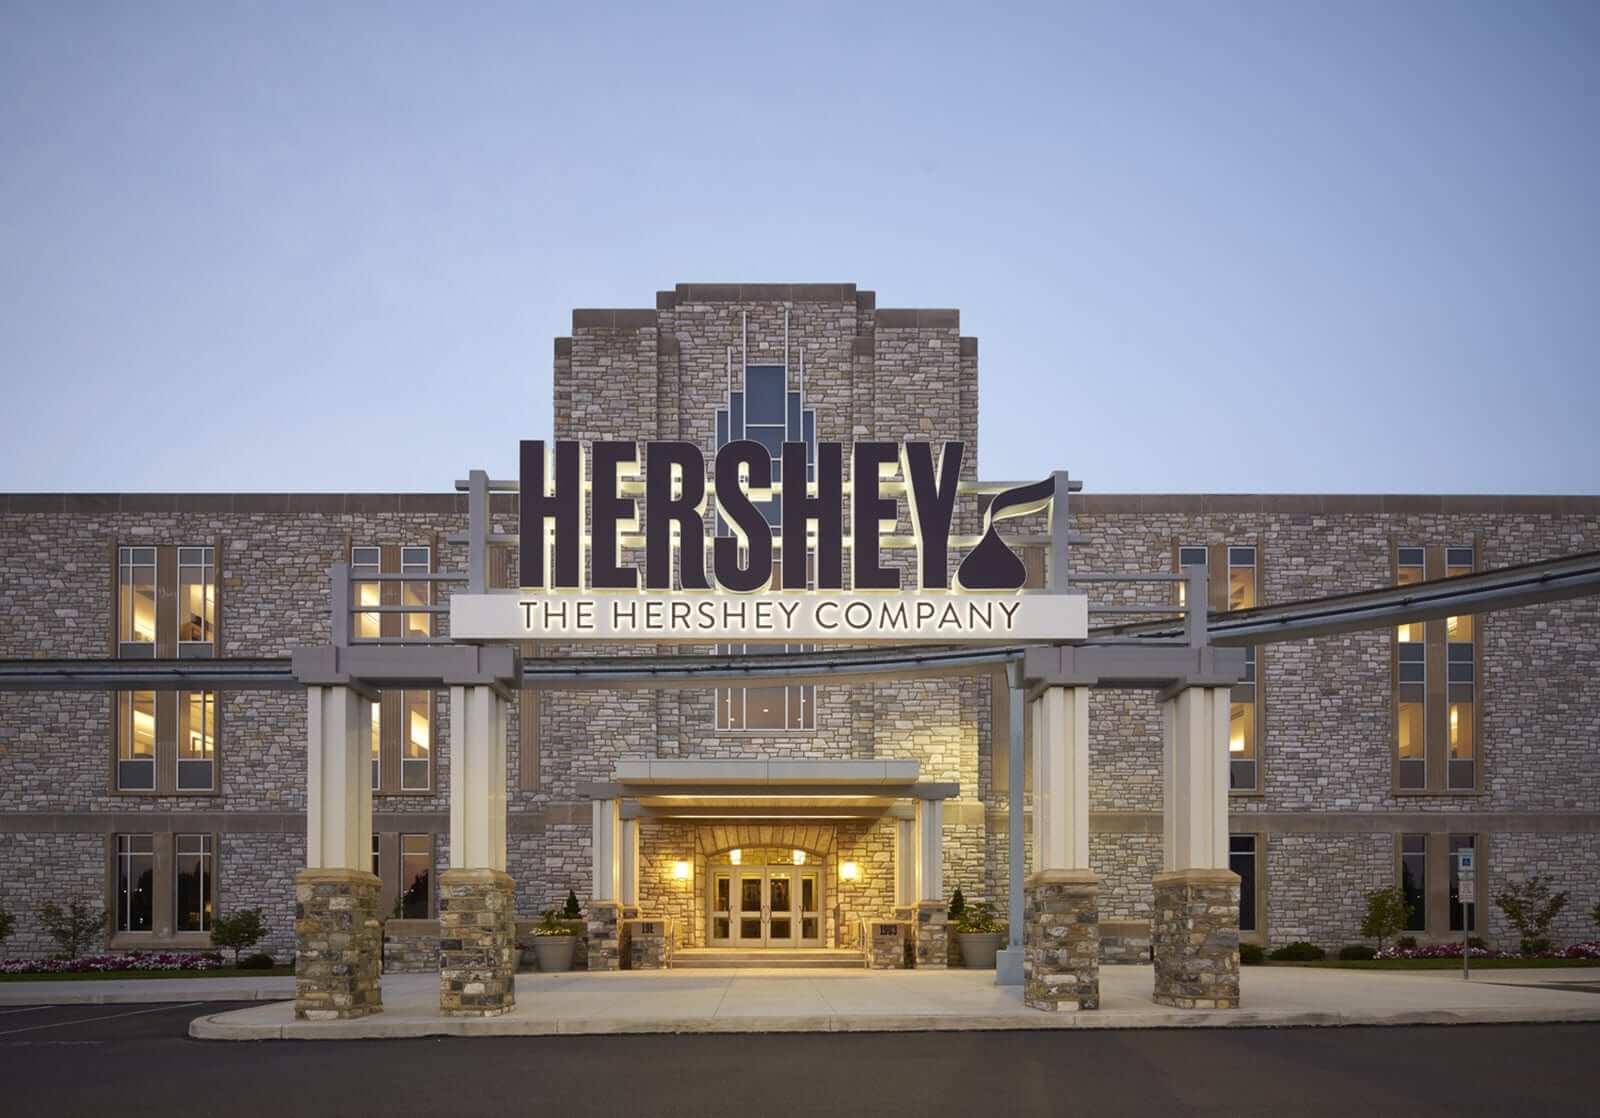 Hershey Mission & Vision Statement